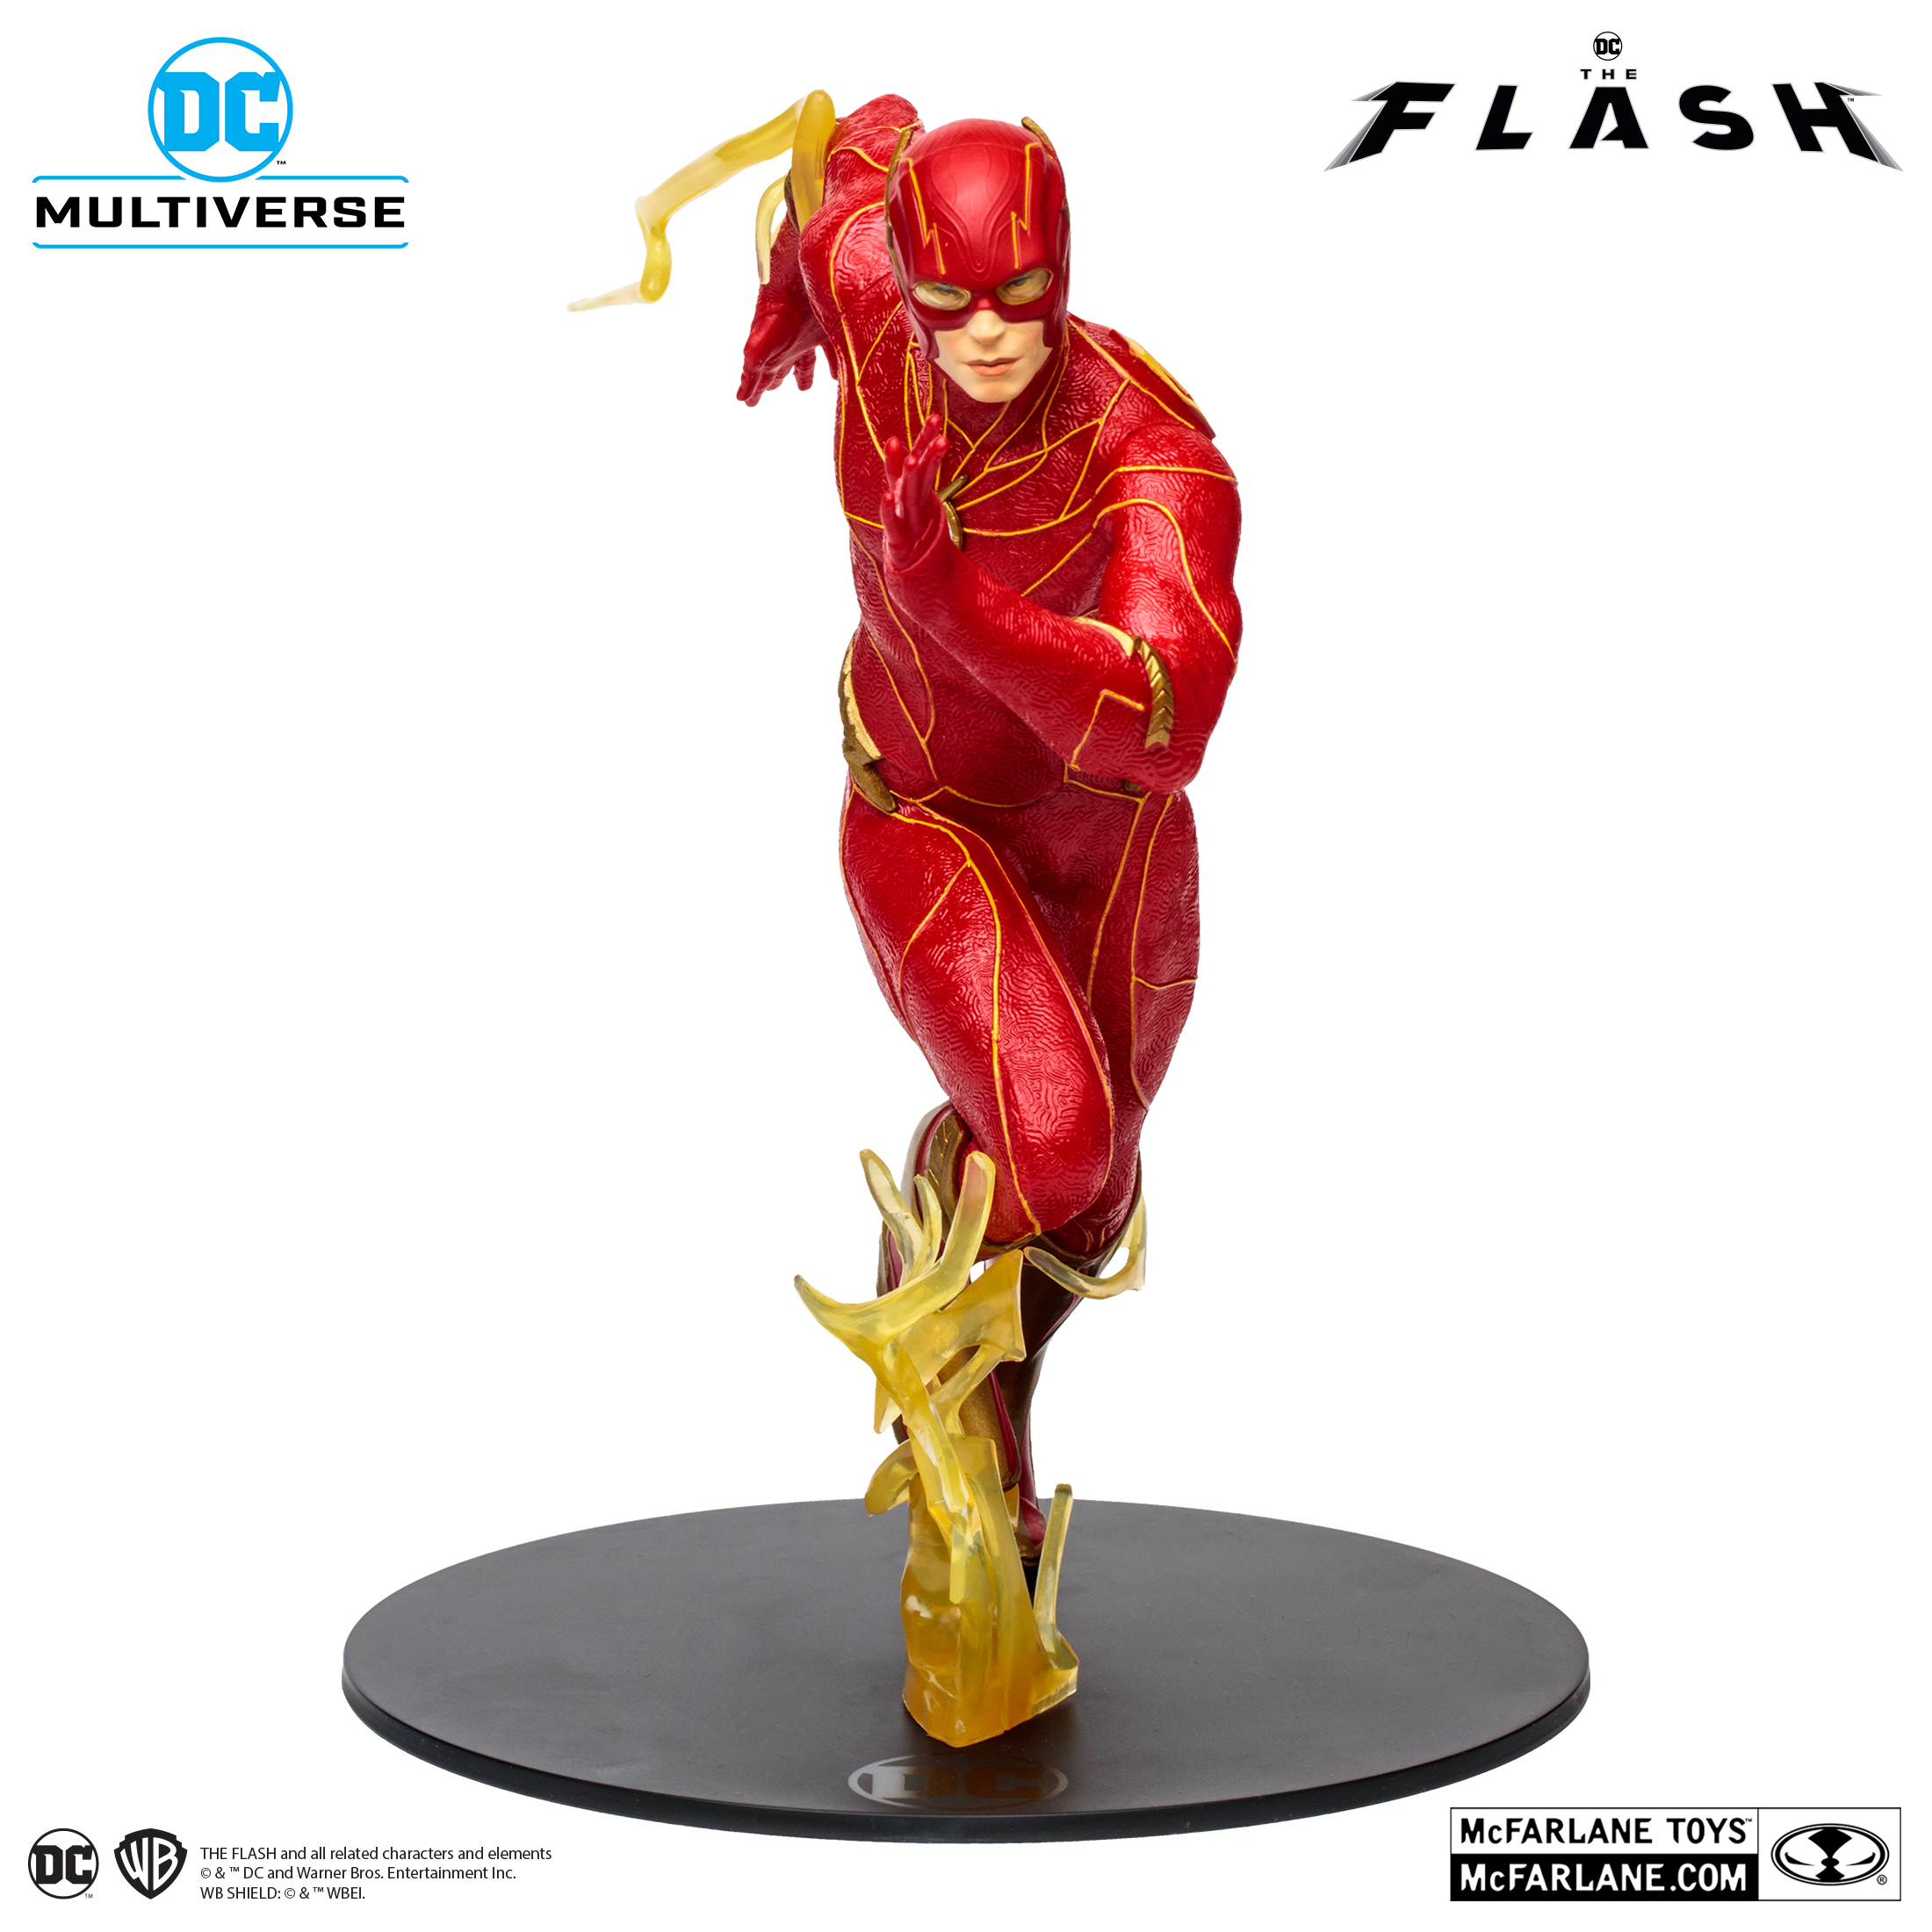 Figurine super-héros asst. dc heroes superman flash shazam